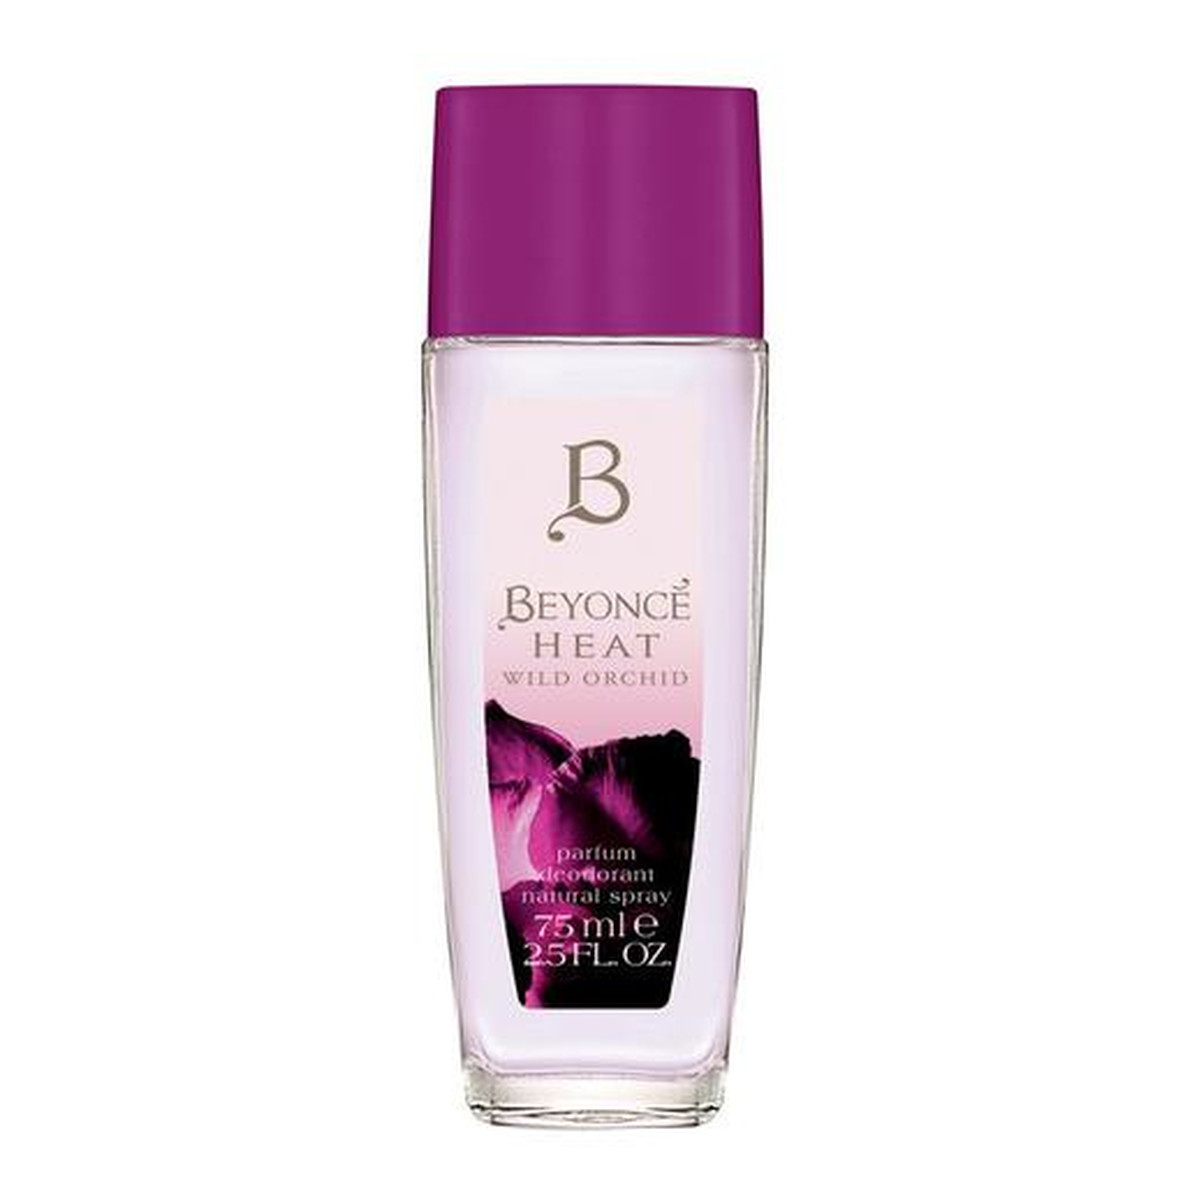 Beyonce Heat Wild Orchid Dezodorant naturalny spray 75ml